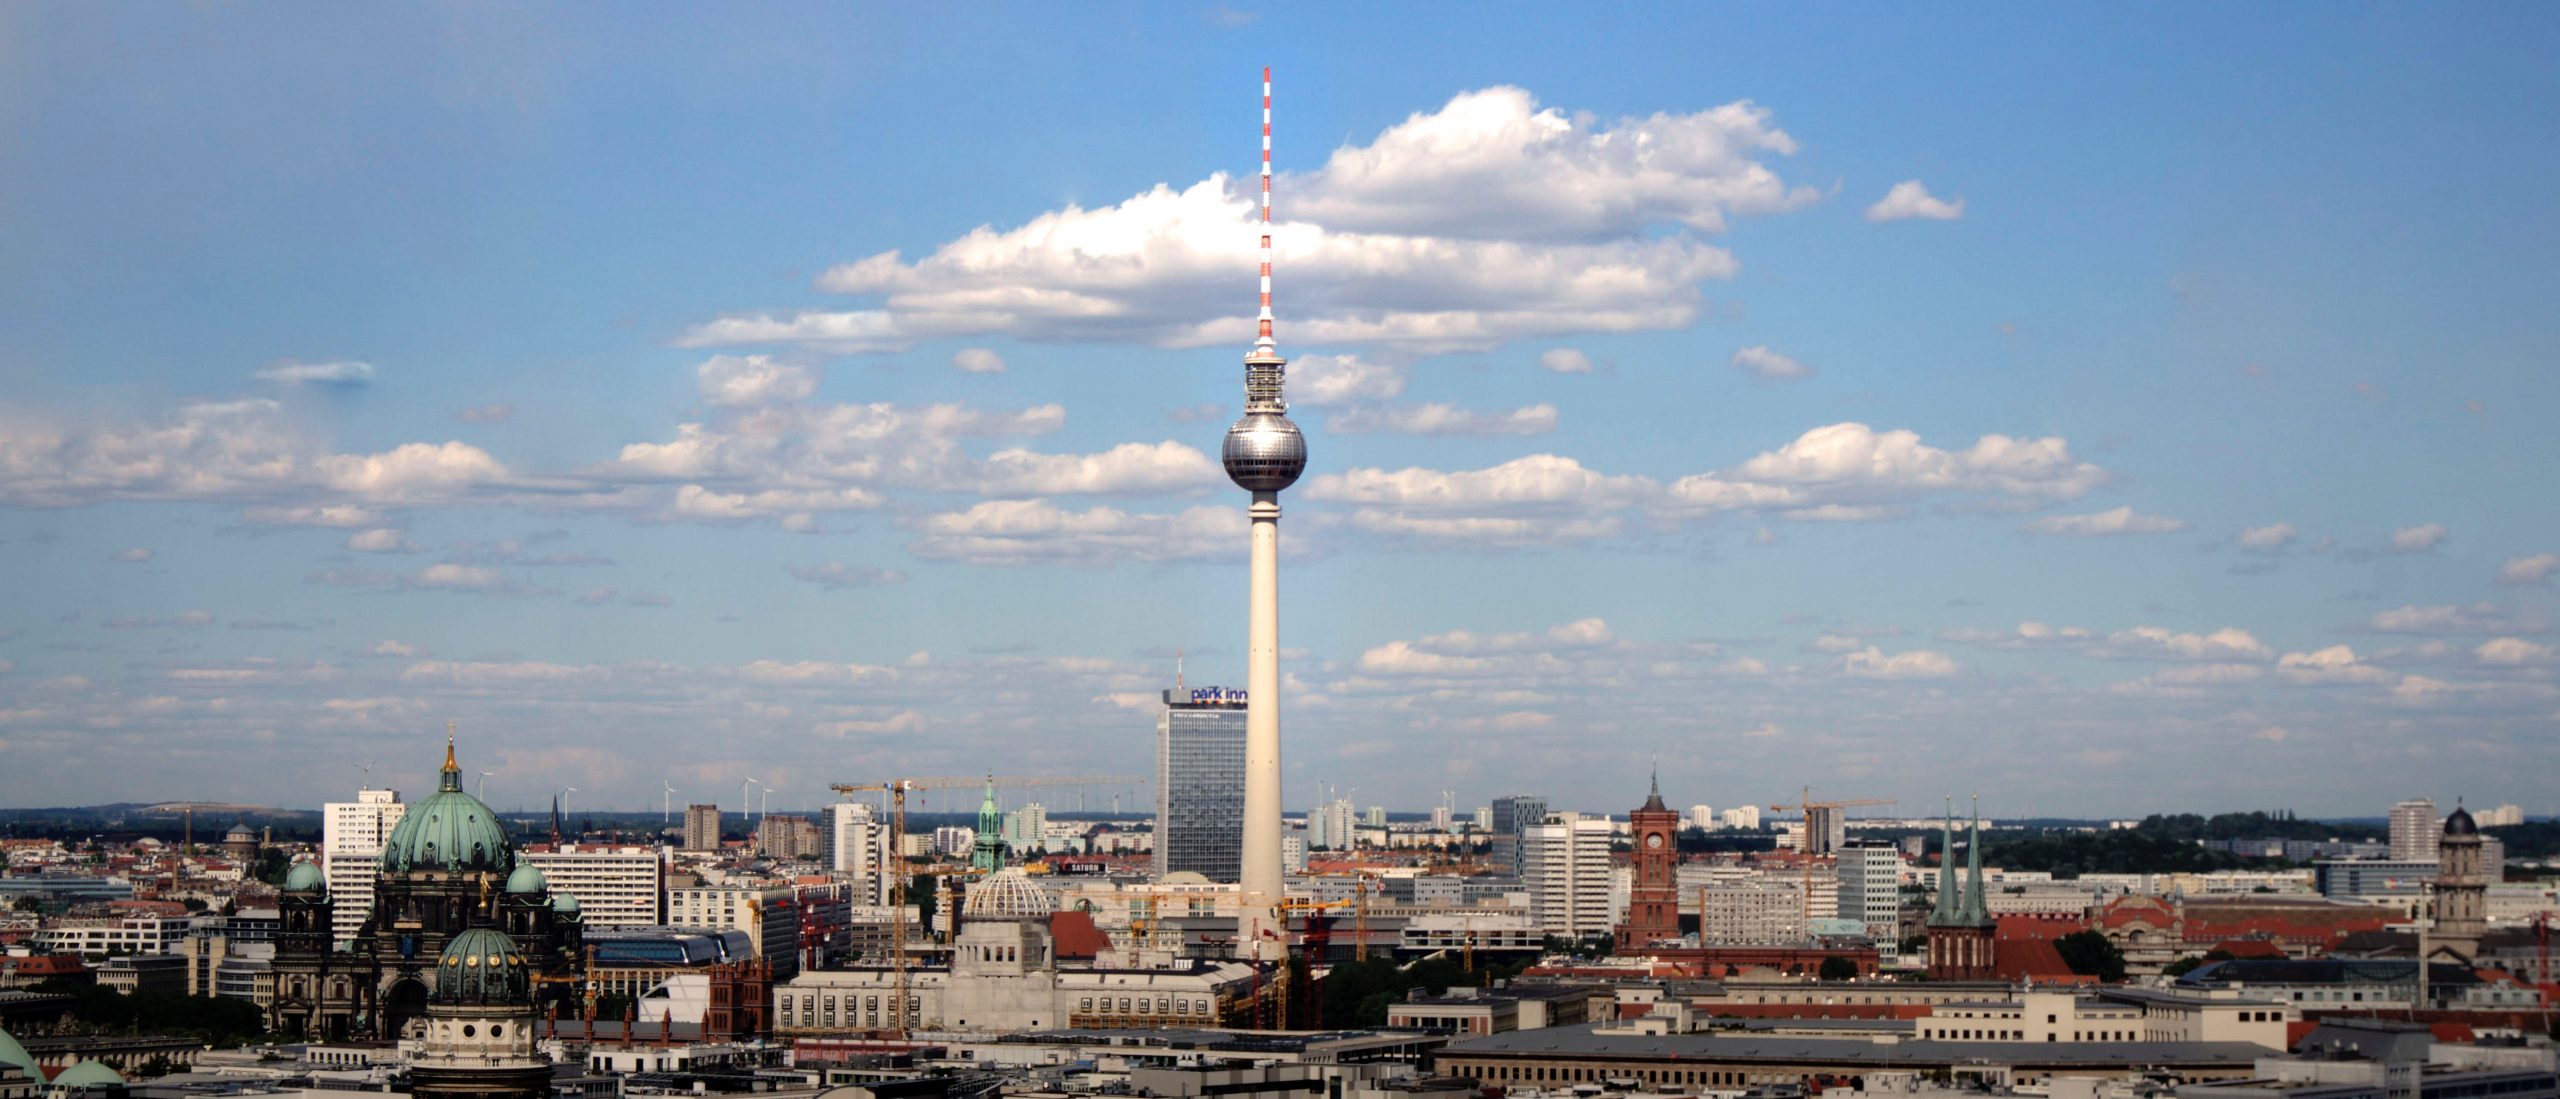 architecture-berlin-buildings-109630